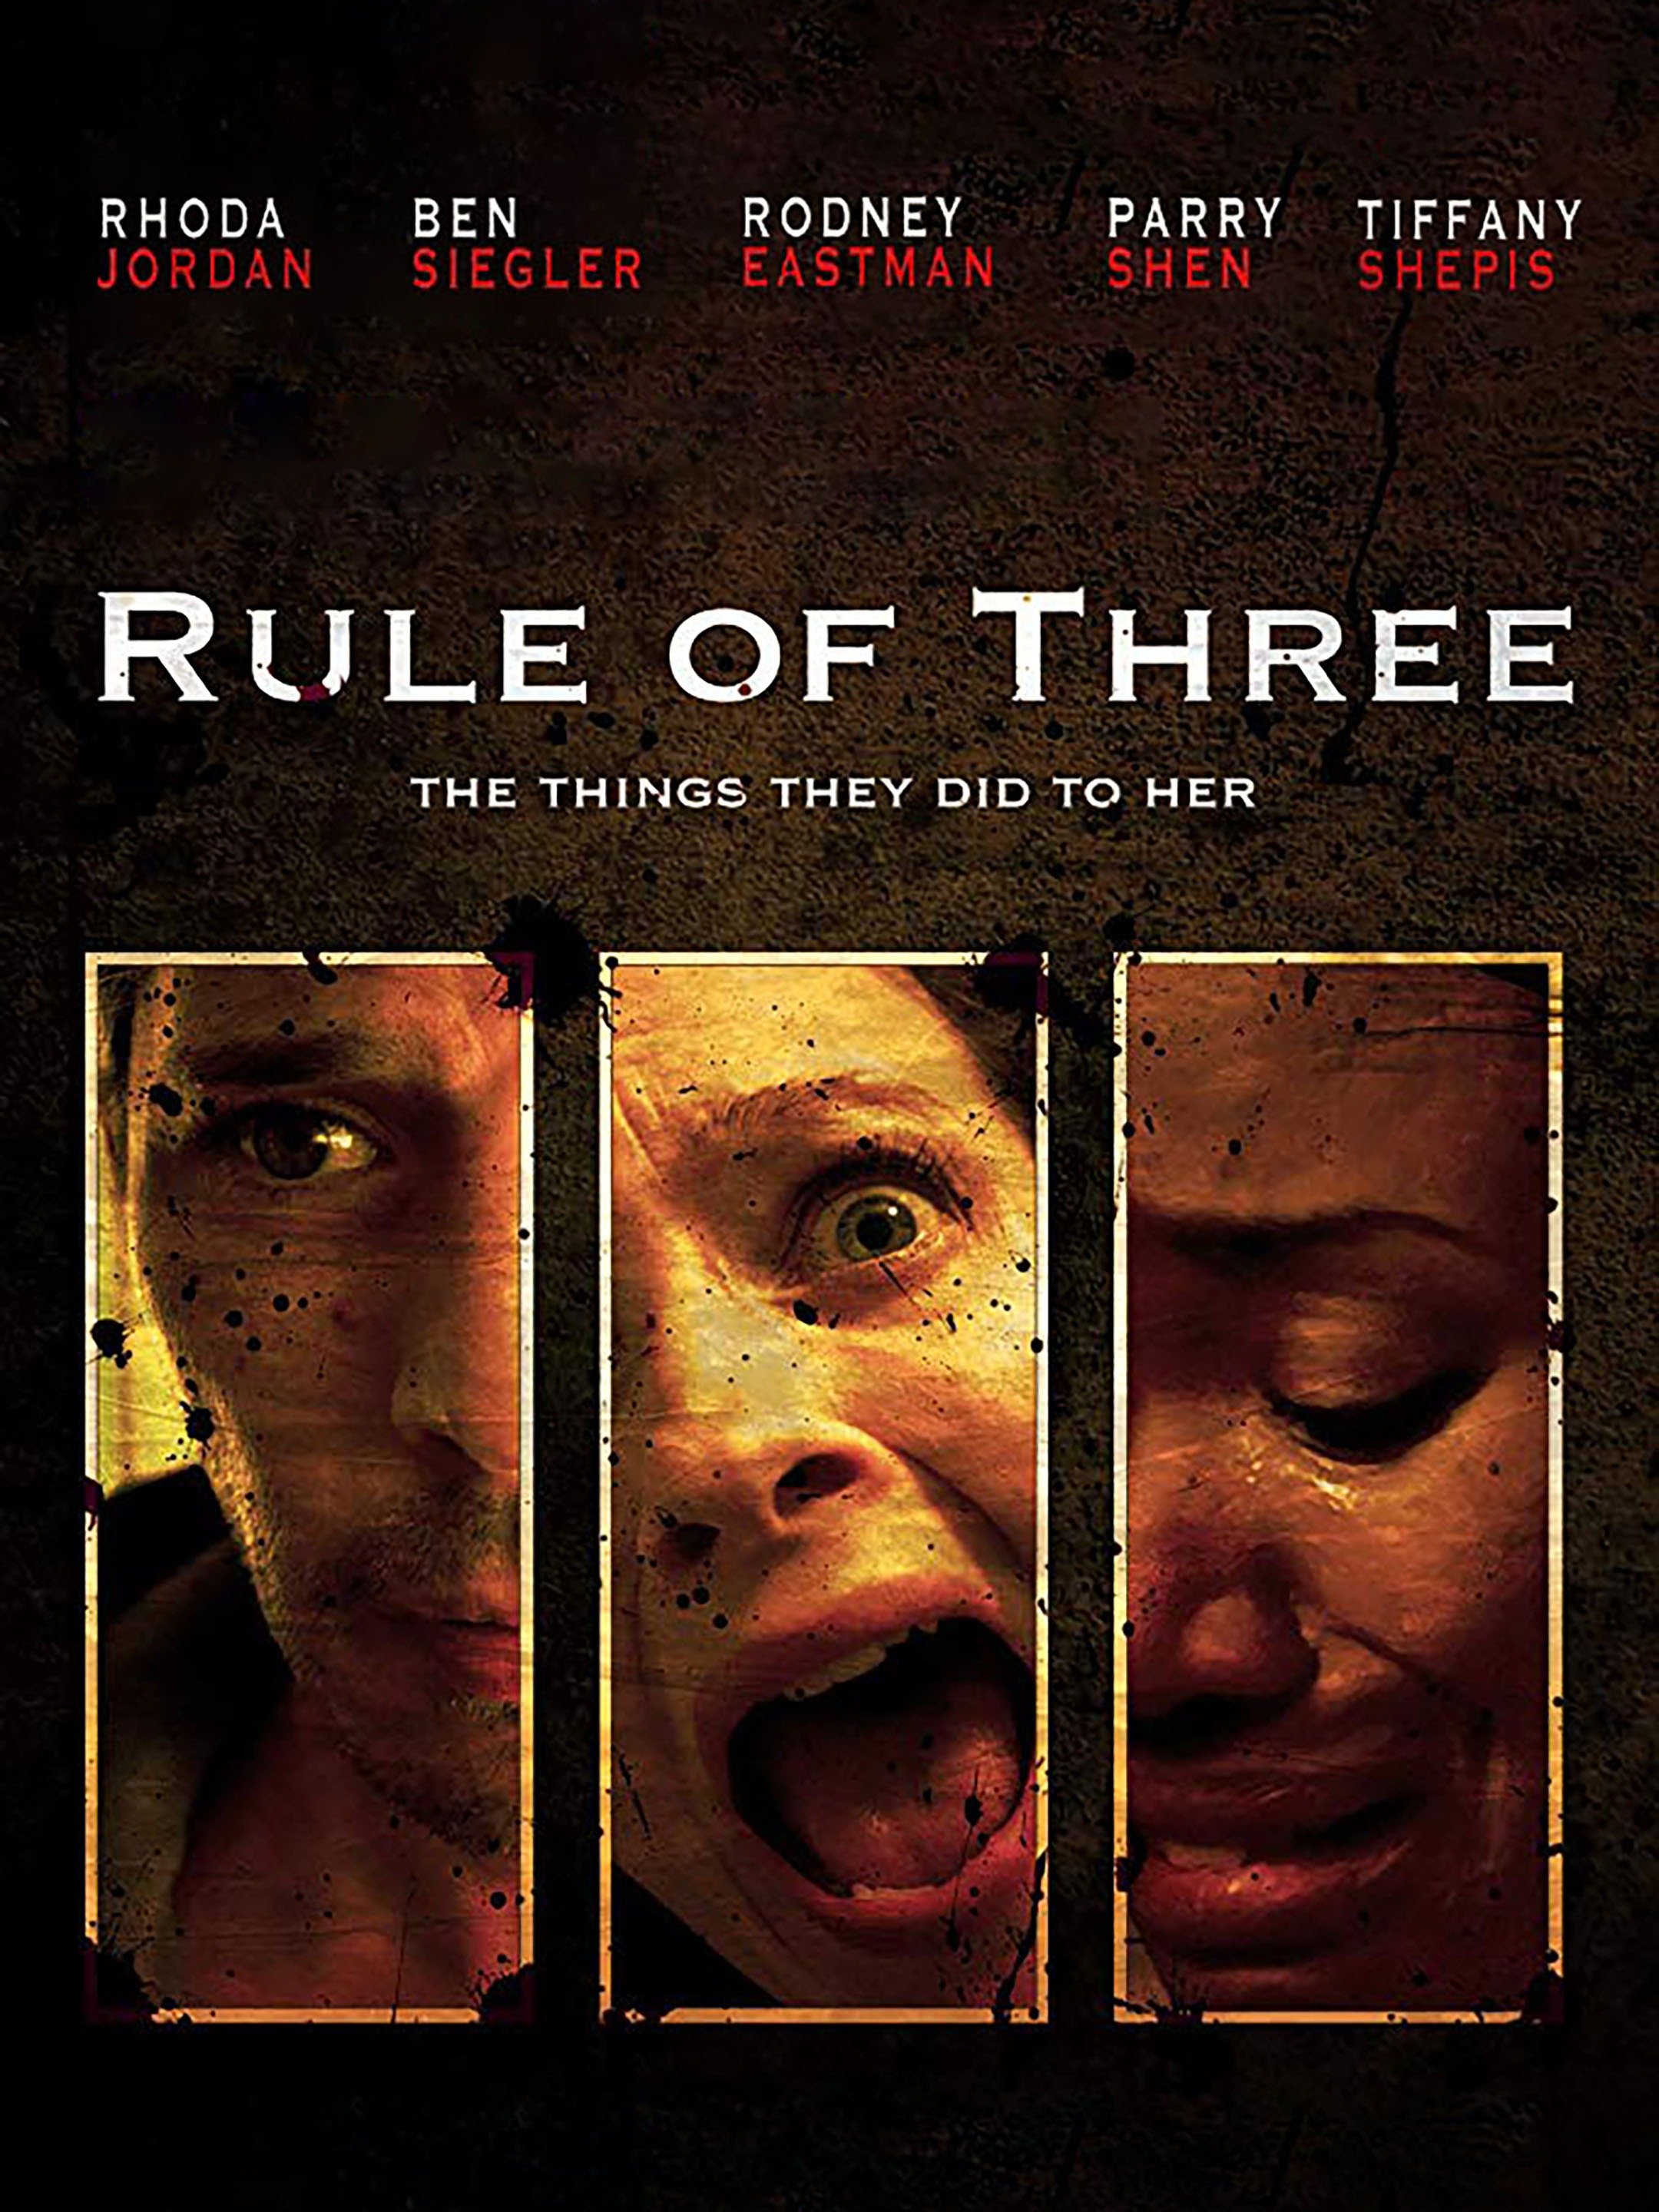 rule-of-three-movie-reviews